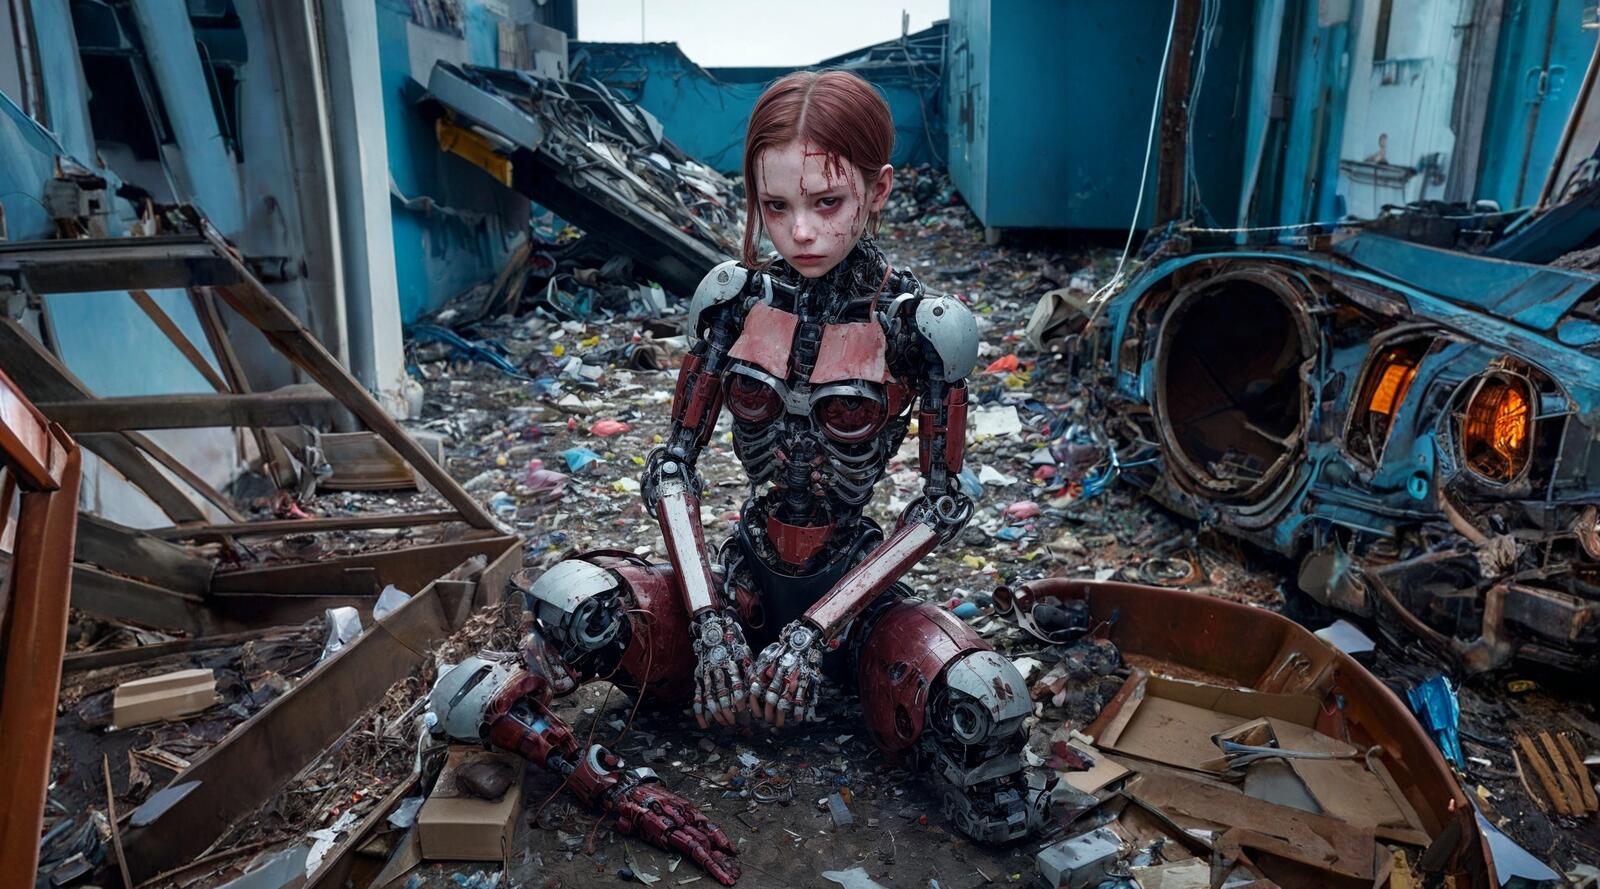 Free photo Broken, broken cyborg girl in a junkyard.